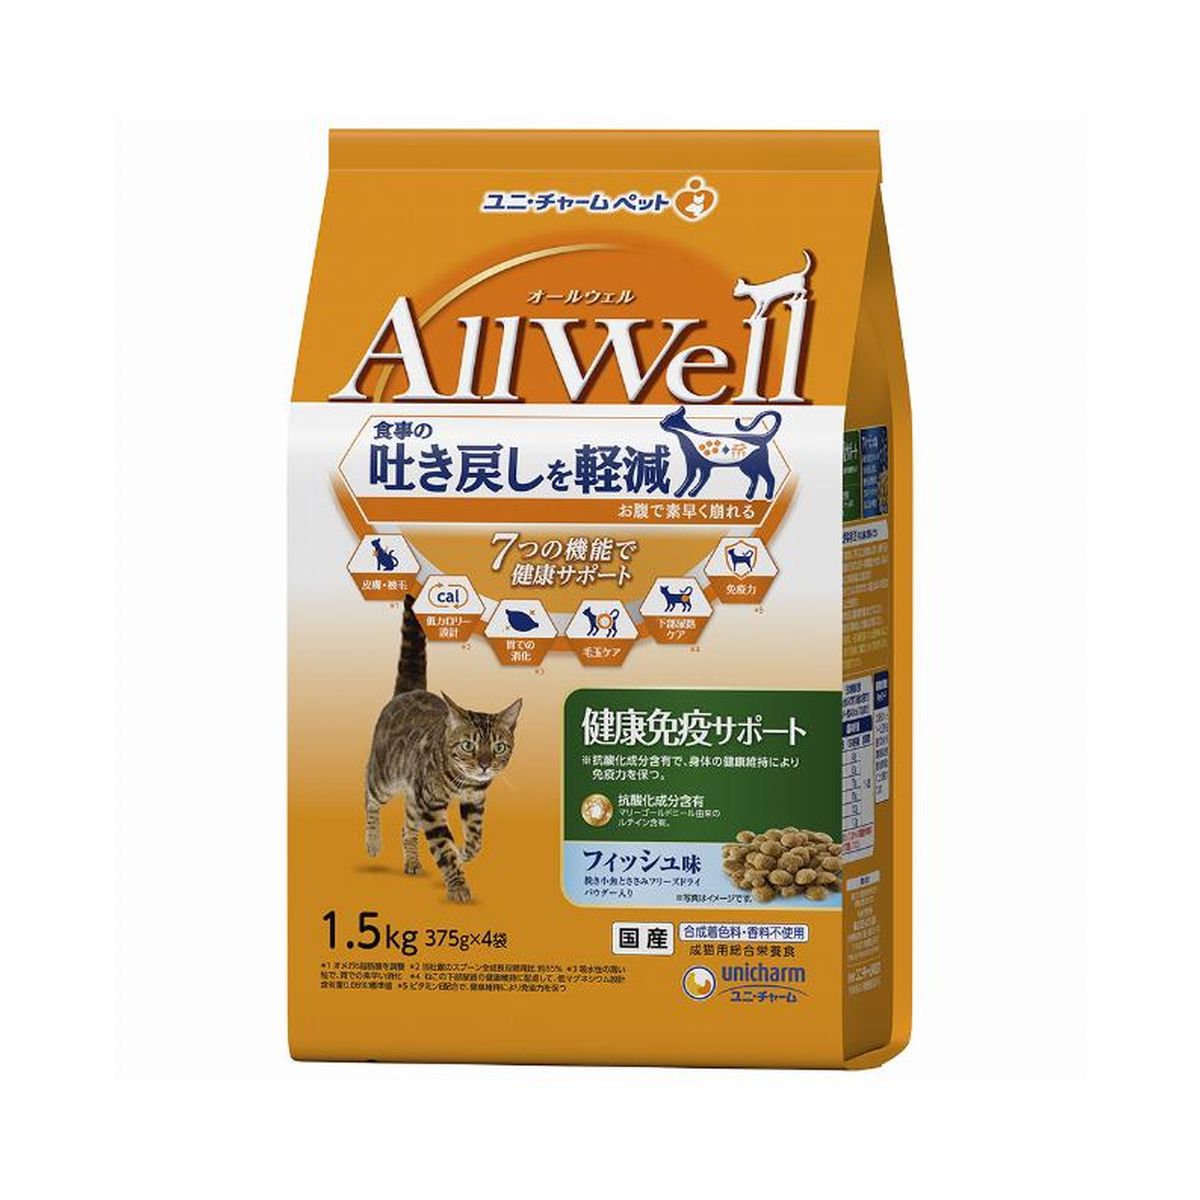 AllWell健康免疫サポート挽キ小魚トササミフリーズドライパウダー入リ 1.5kg×5